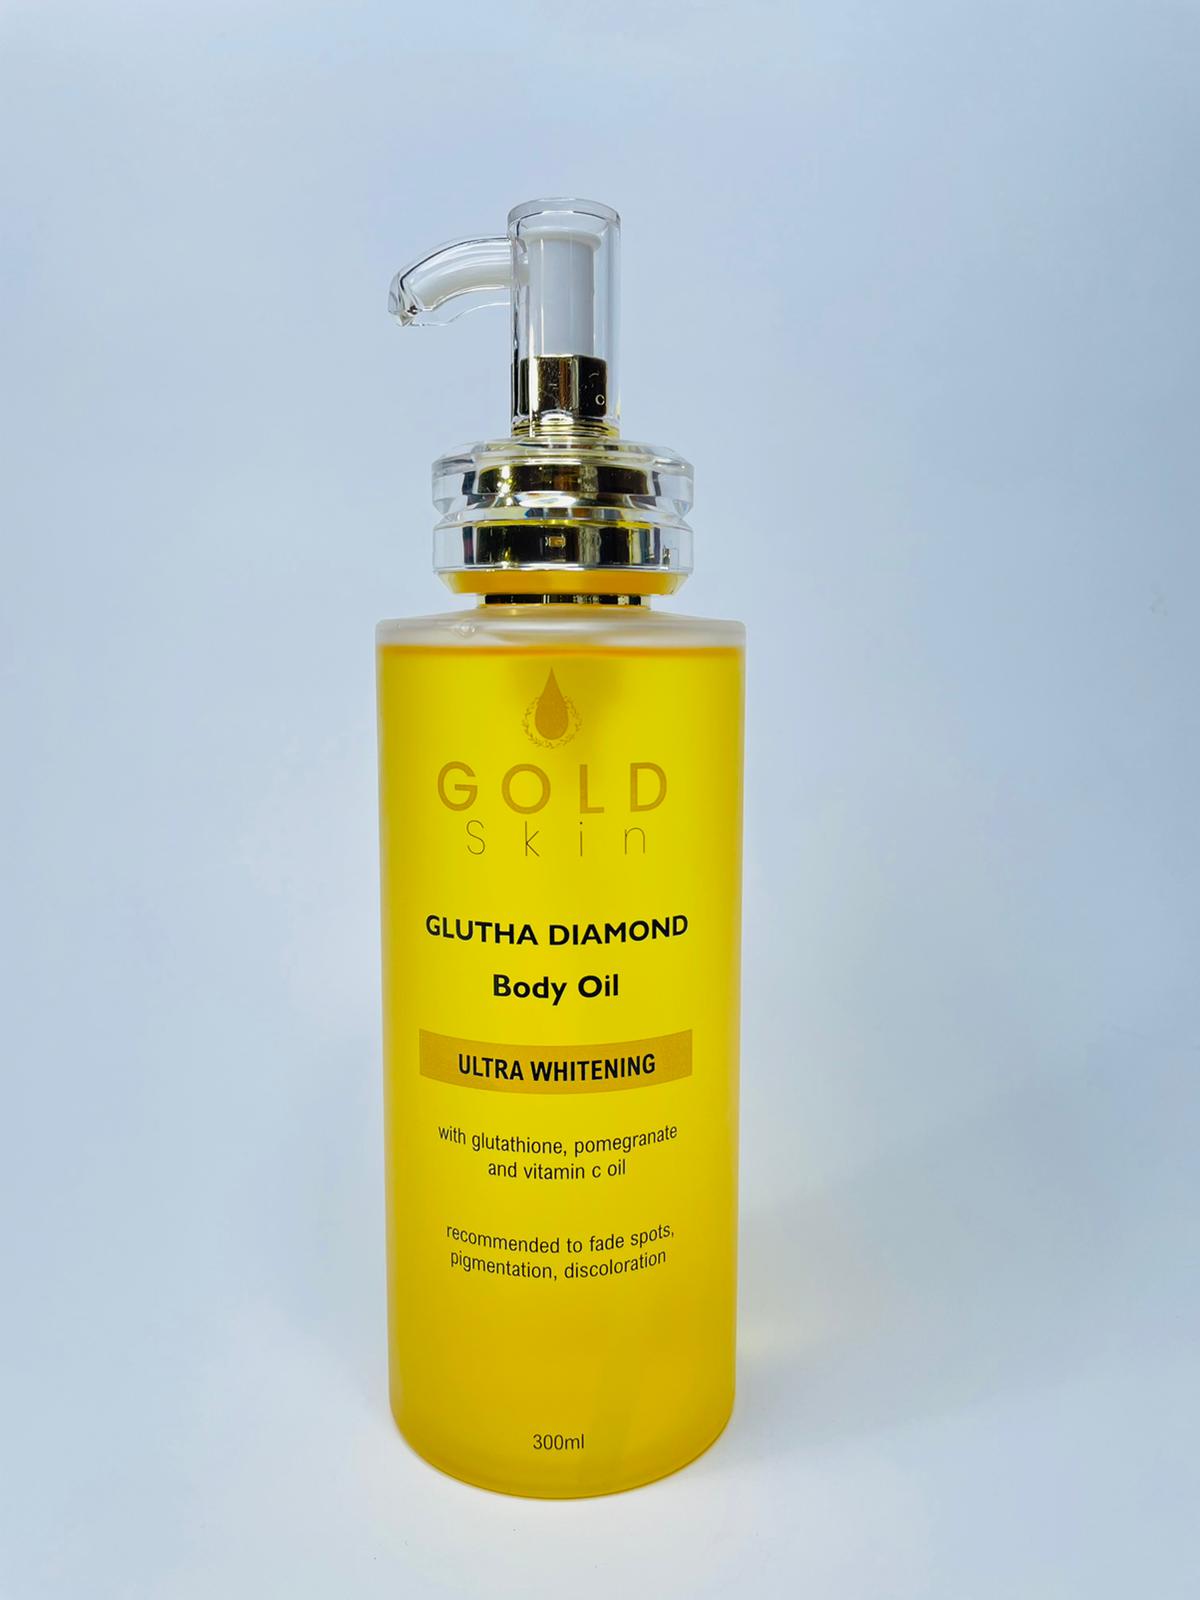 Gluta Diamond Body Oil